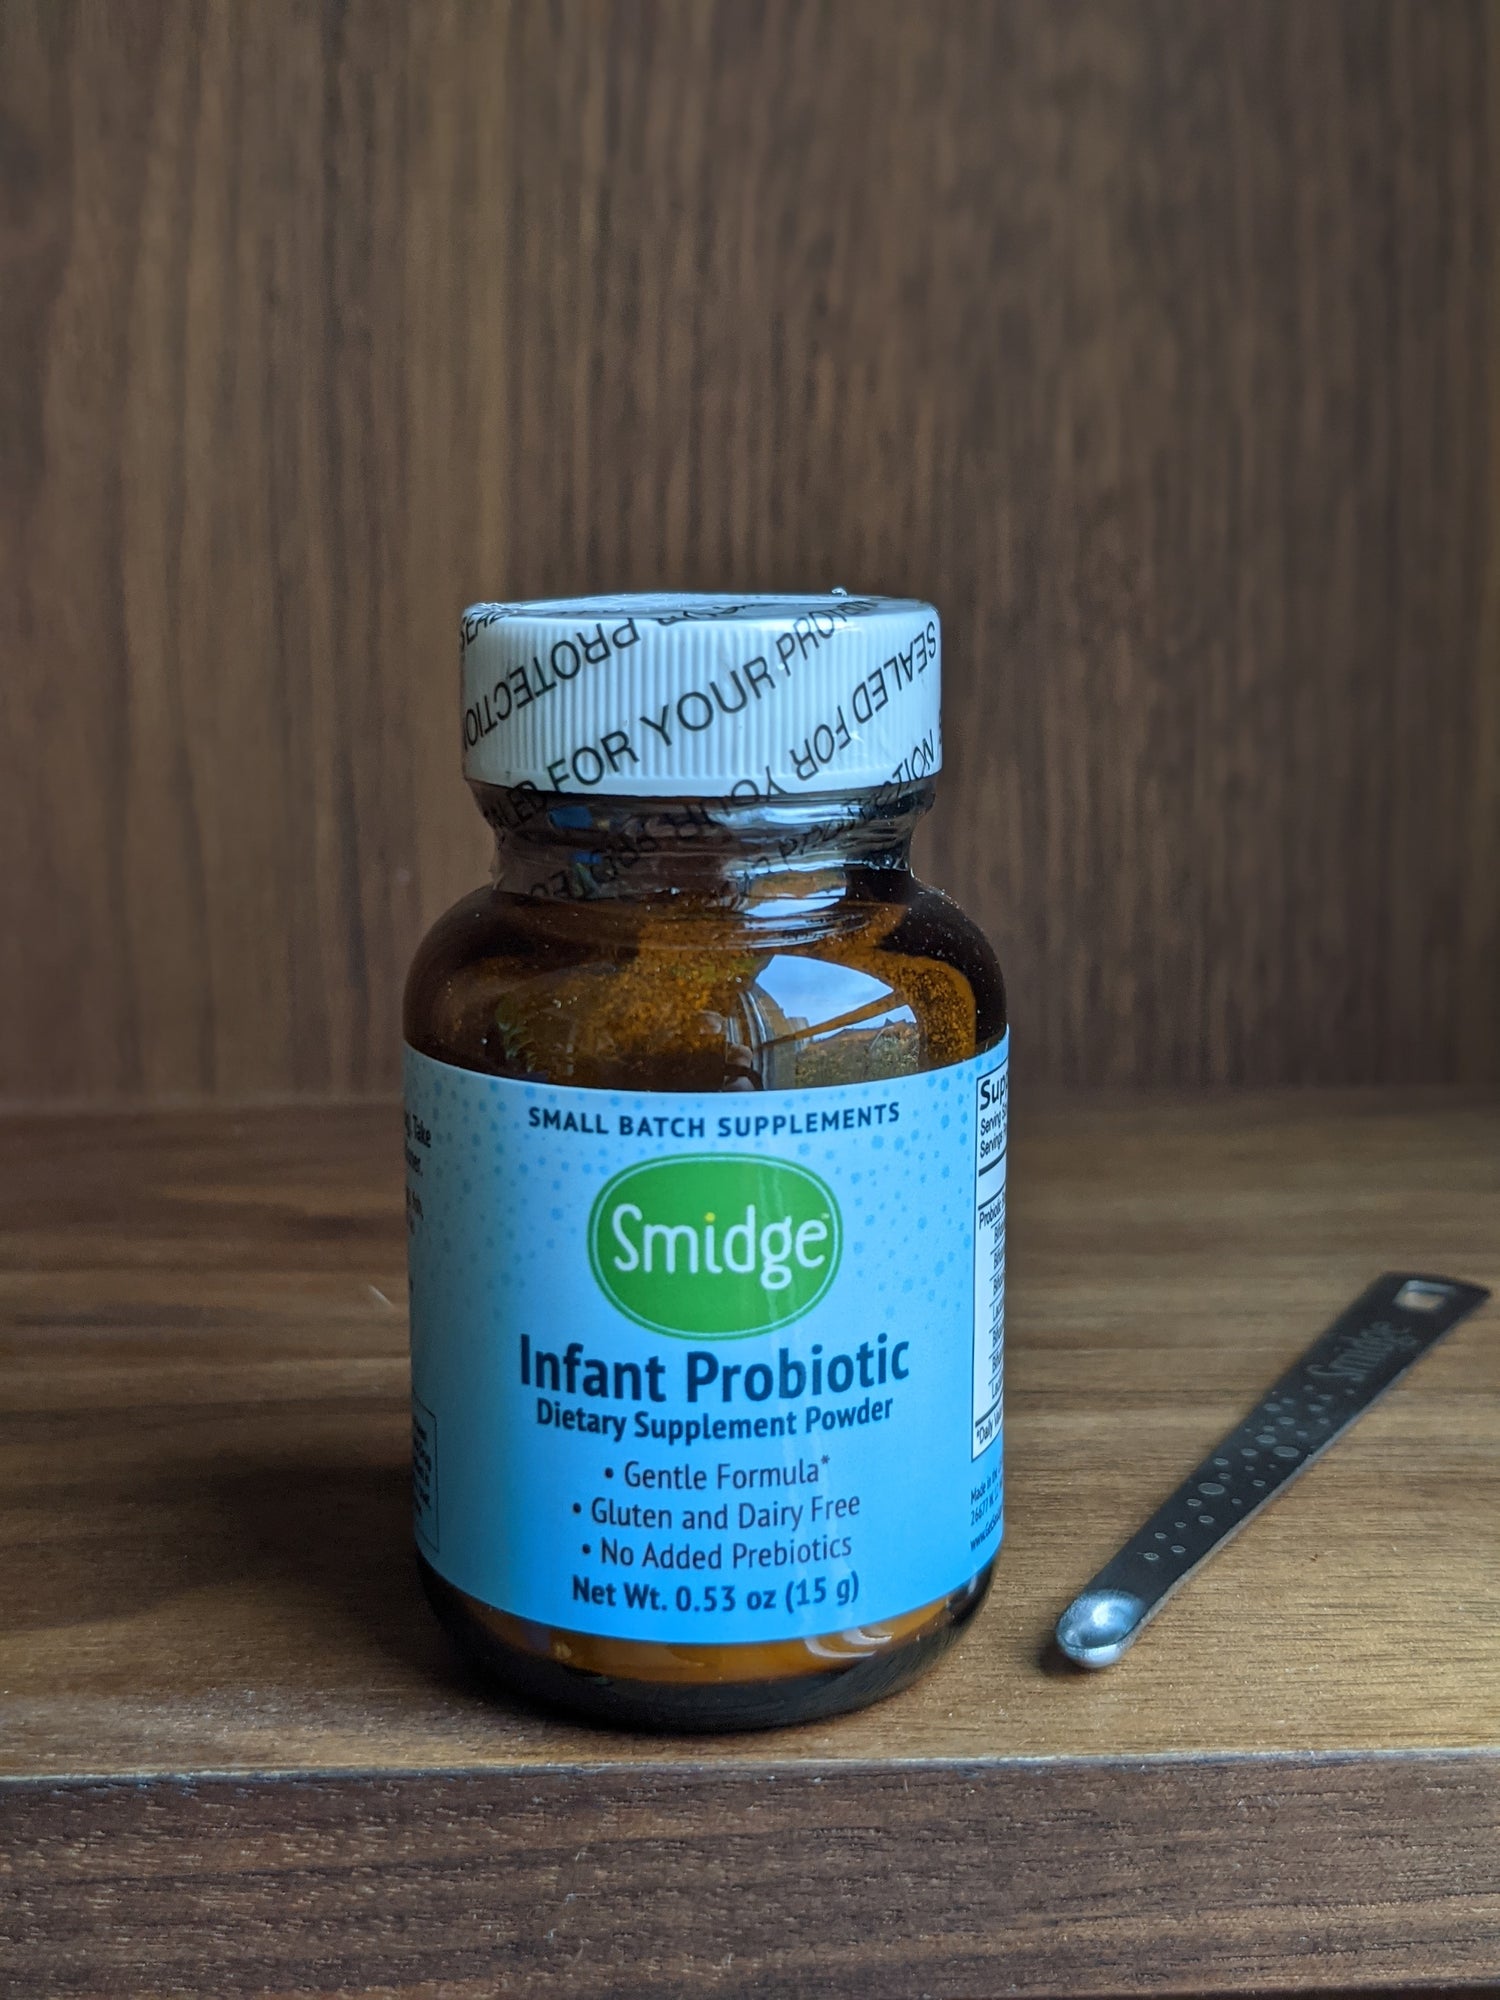 best probiotic  best probiotic for infants  probiotics for infants  probiotics  infant probiotics powder  probiotics supplement  probiotics powder  probiotic for infants  infant gut  probiotic  infant  gut  baby